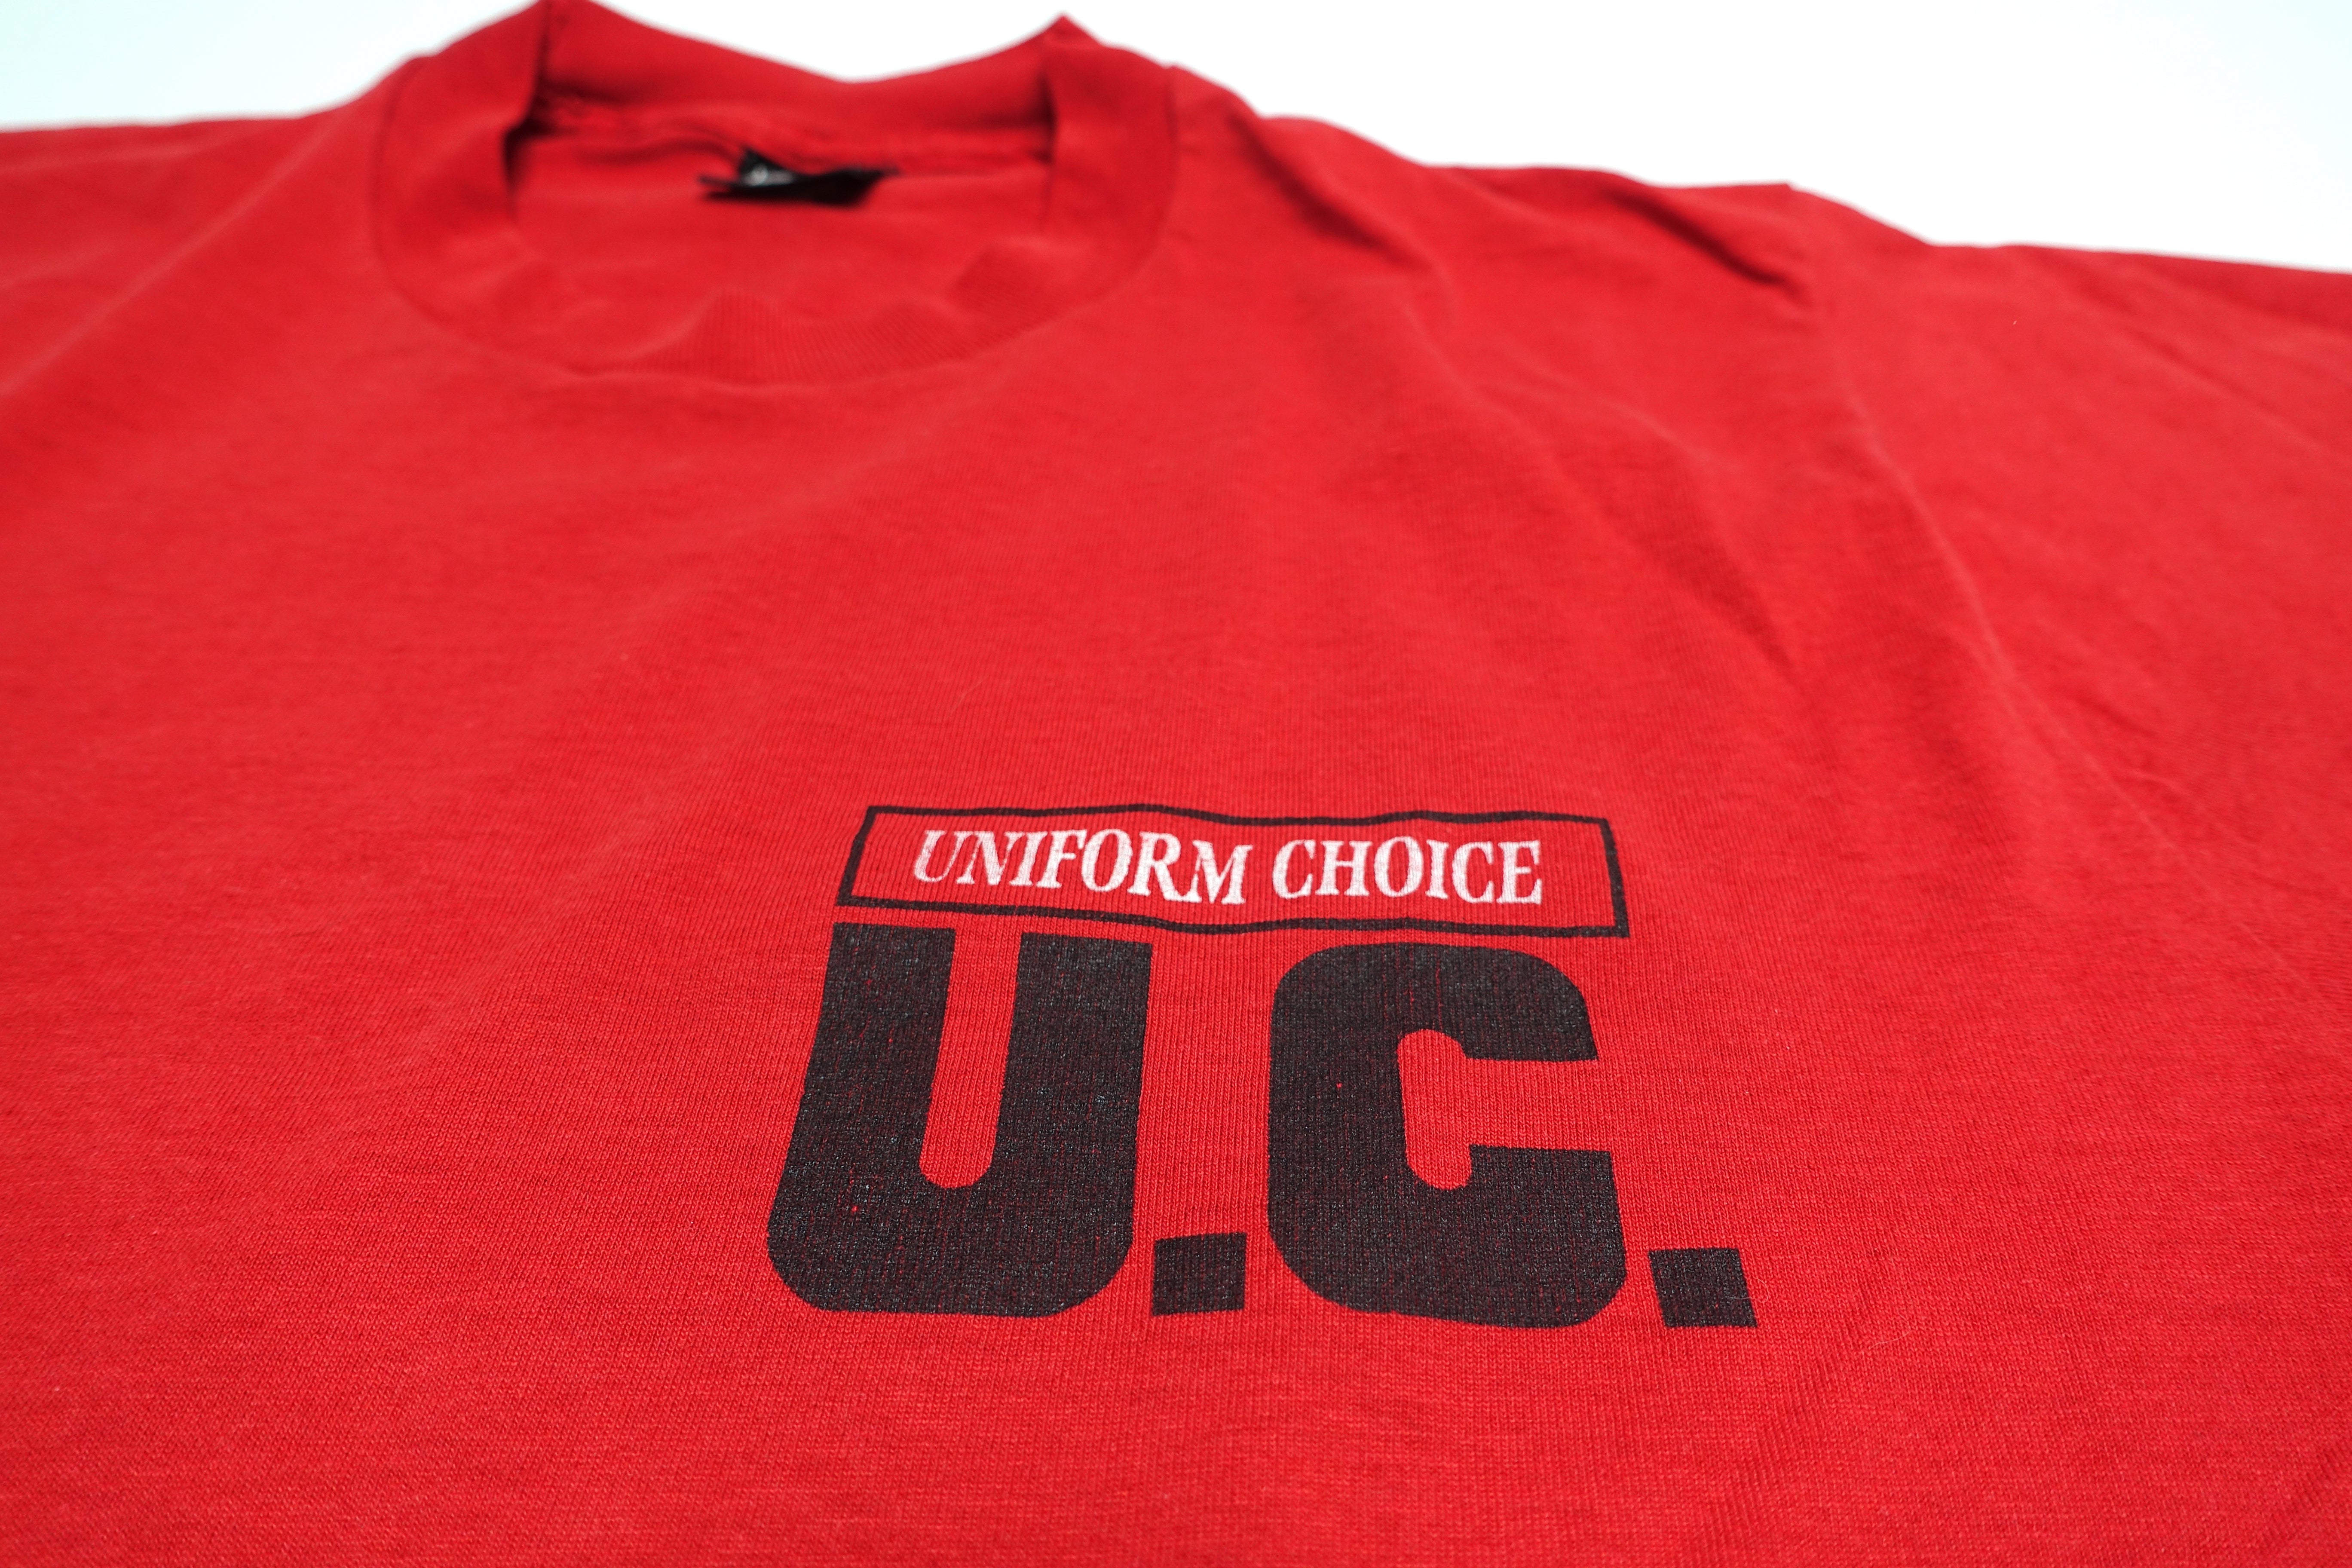 Uniform Choice ‎– U.C. Rectangle Logo Tour Shirt Size Large